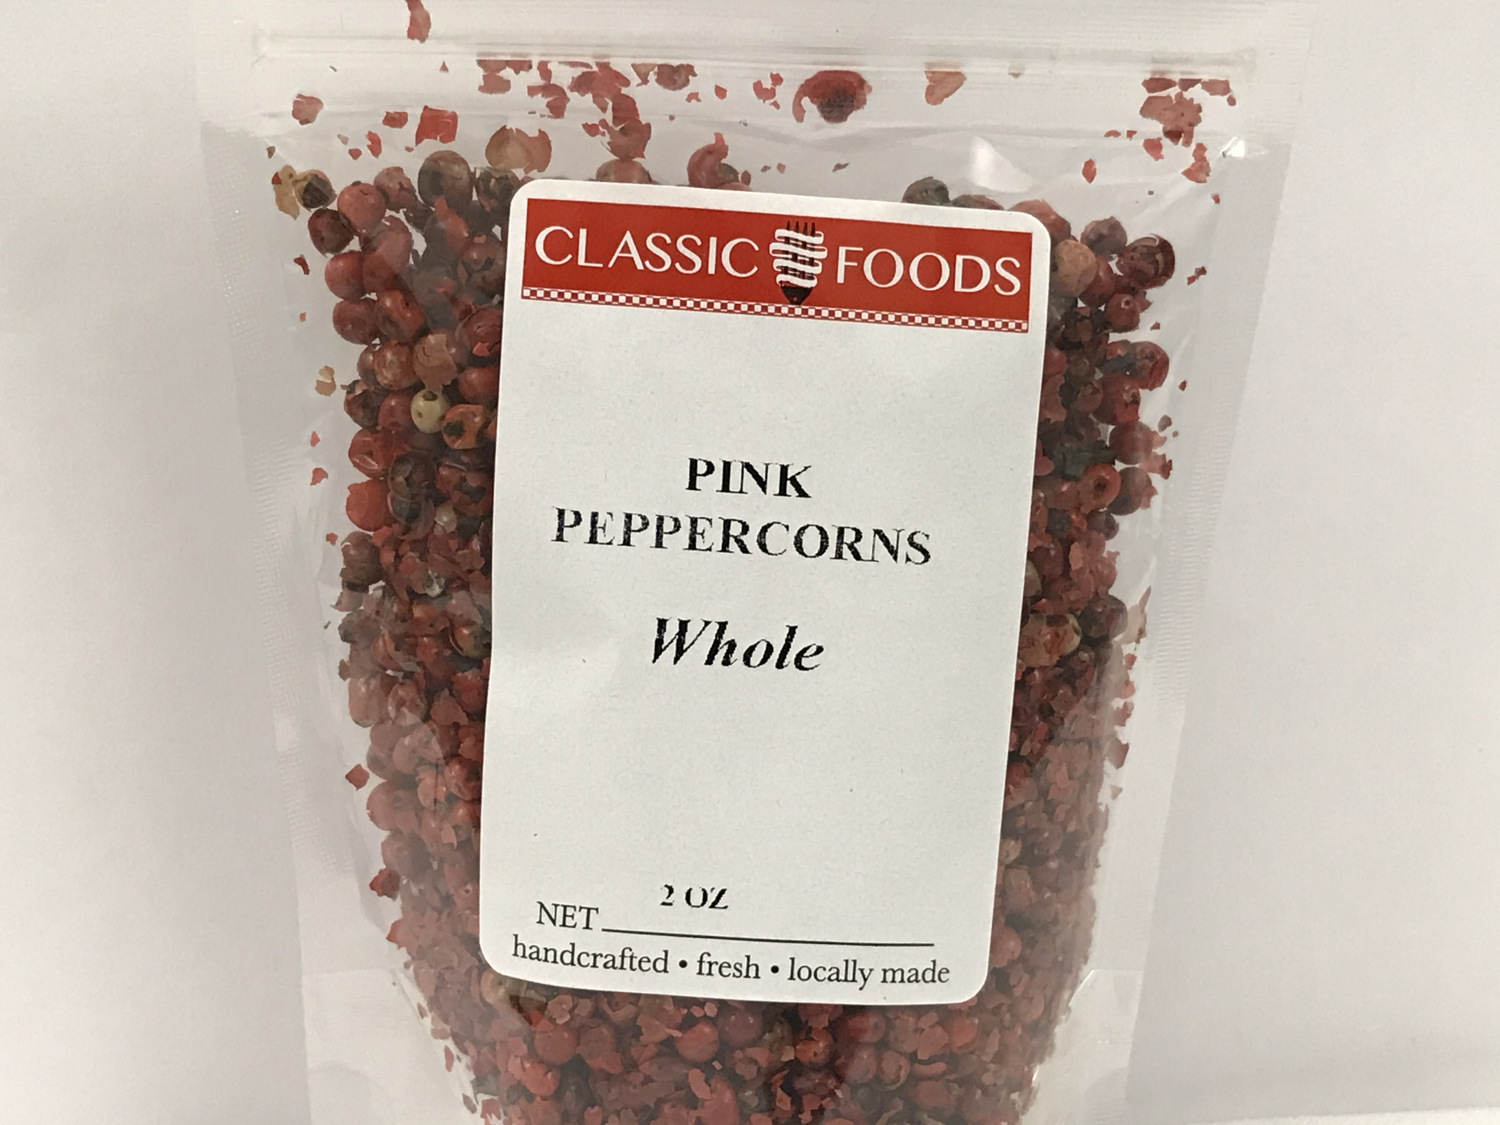 PINK PEPPERCORNS - WHOLE 2 oz